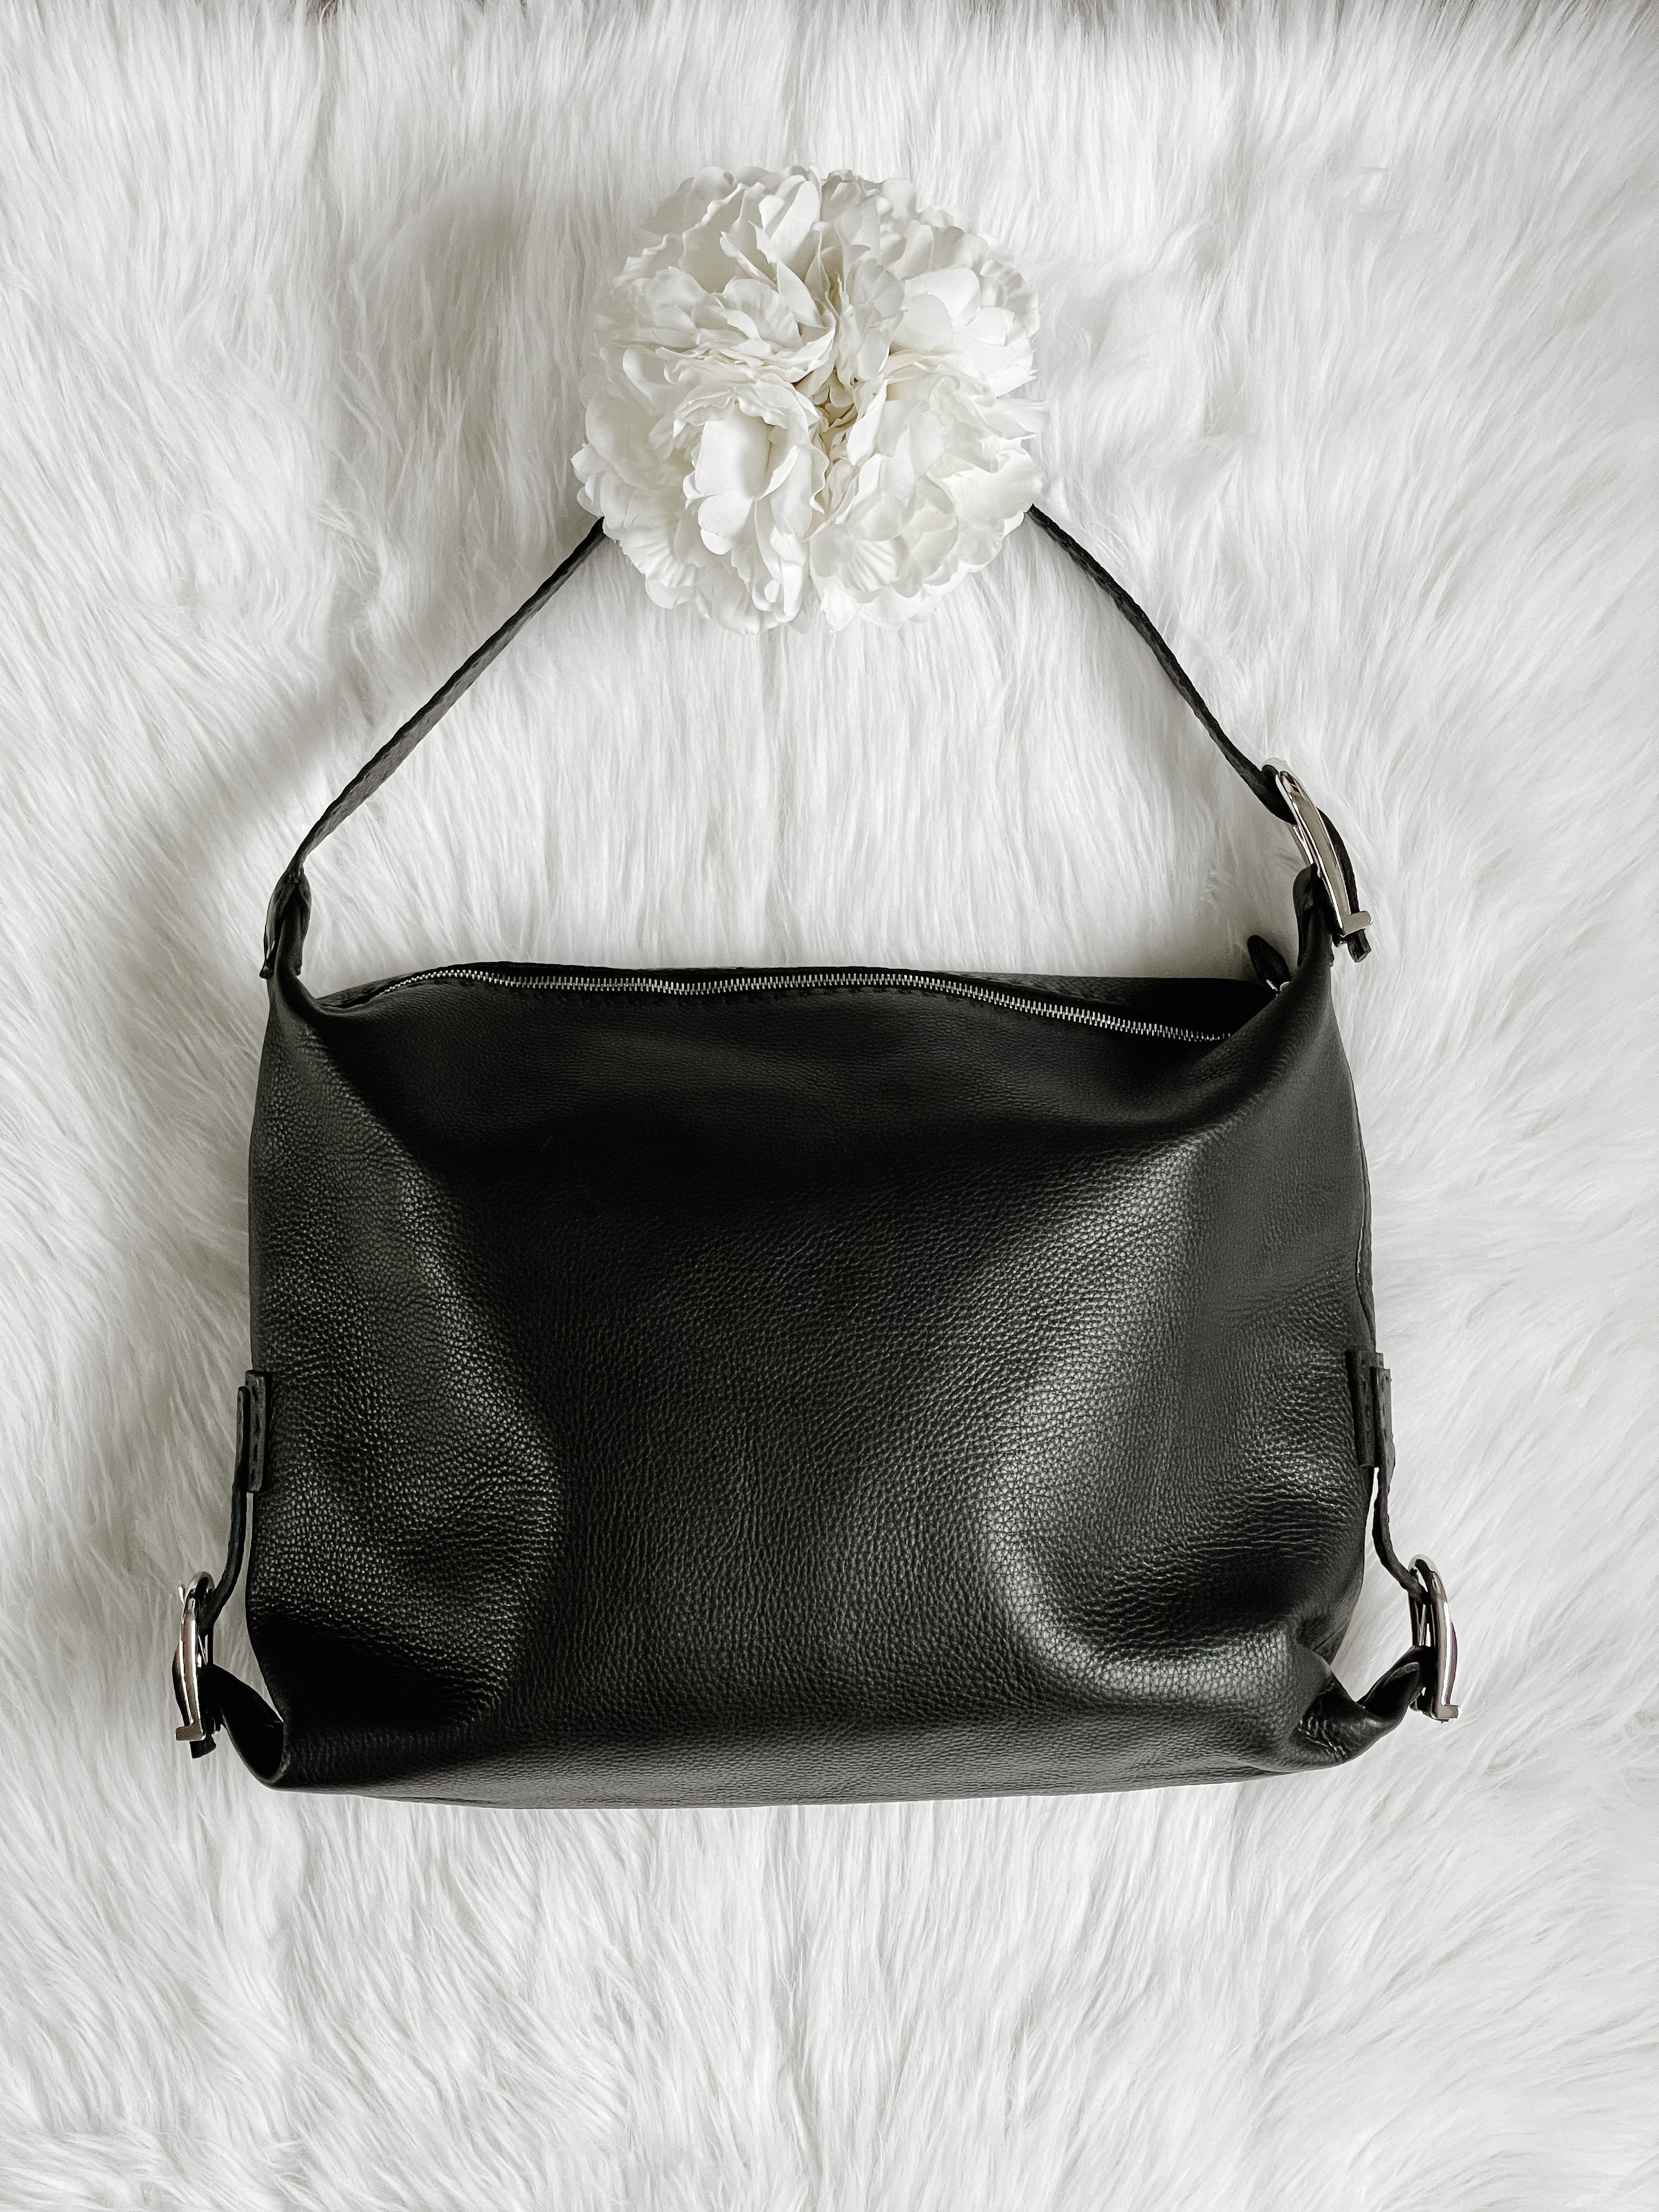 Buy Wrangler Purses and Handbags for Women Hobo Bags Leather Crossbody  Shoulder Bags Women Tote Bags WG16-1022BK Black at Amazon.in